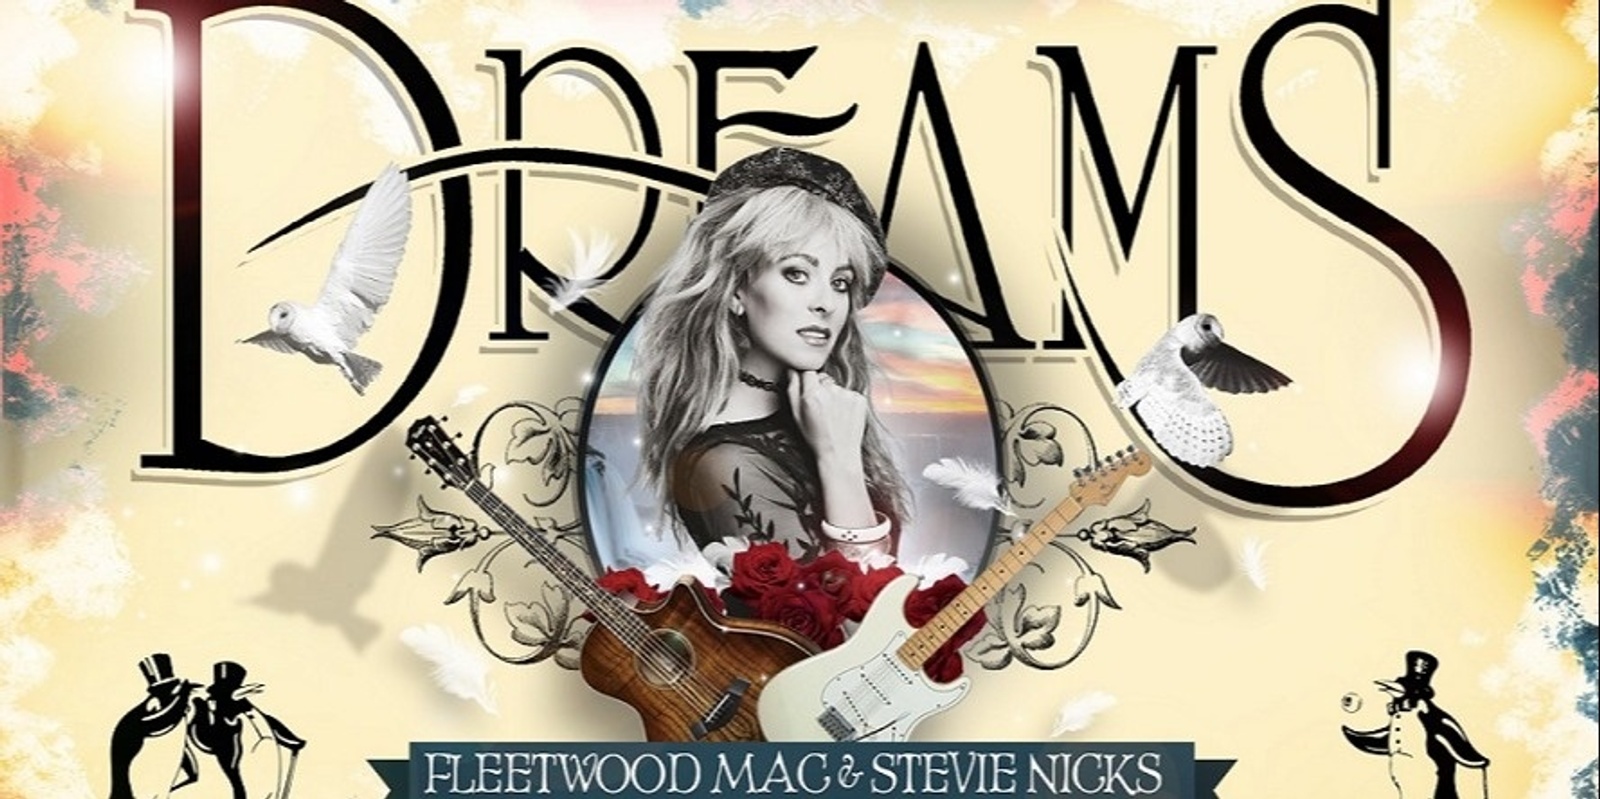 Banner image for Dreams - Fleetwood Mac & Stevie Nicks Show at Wauchope RSL